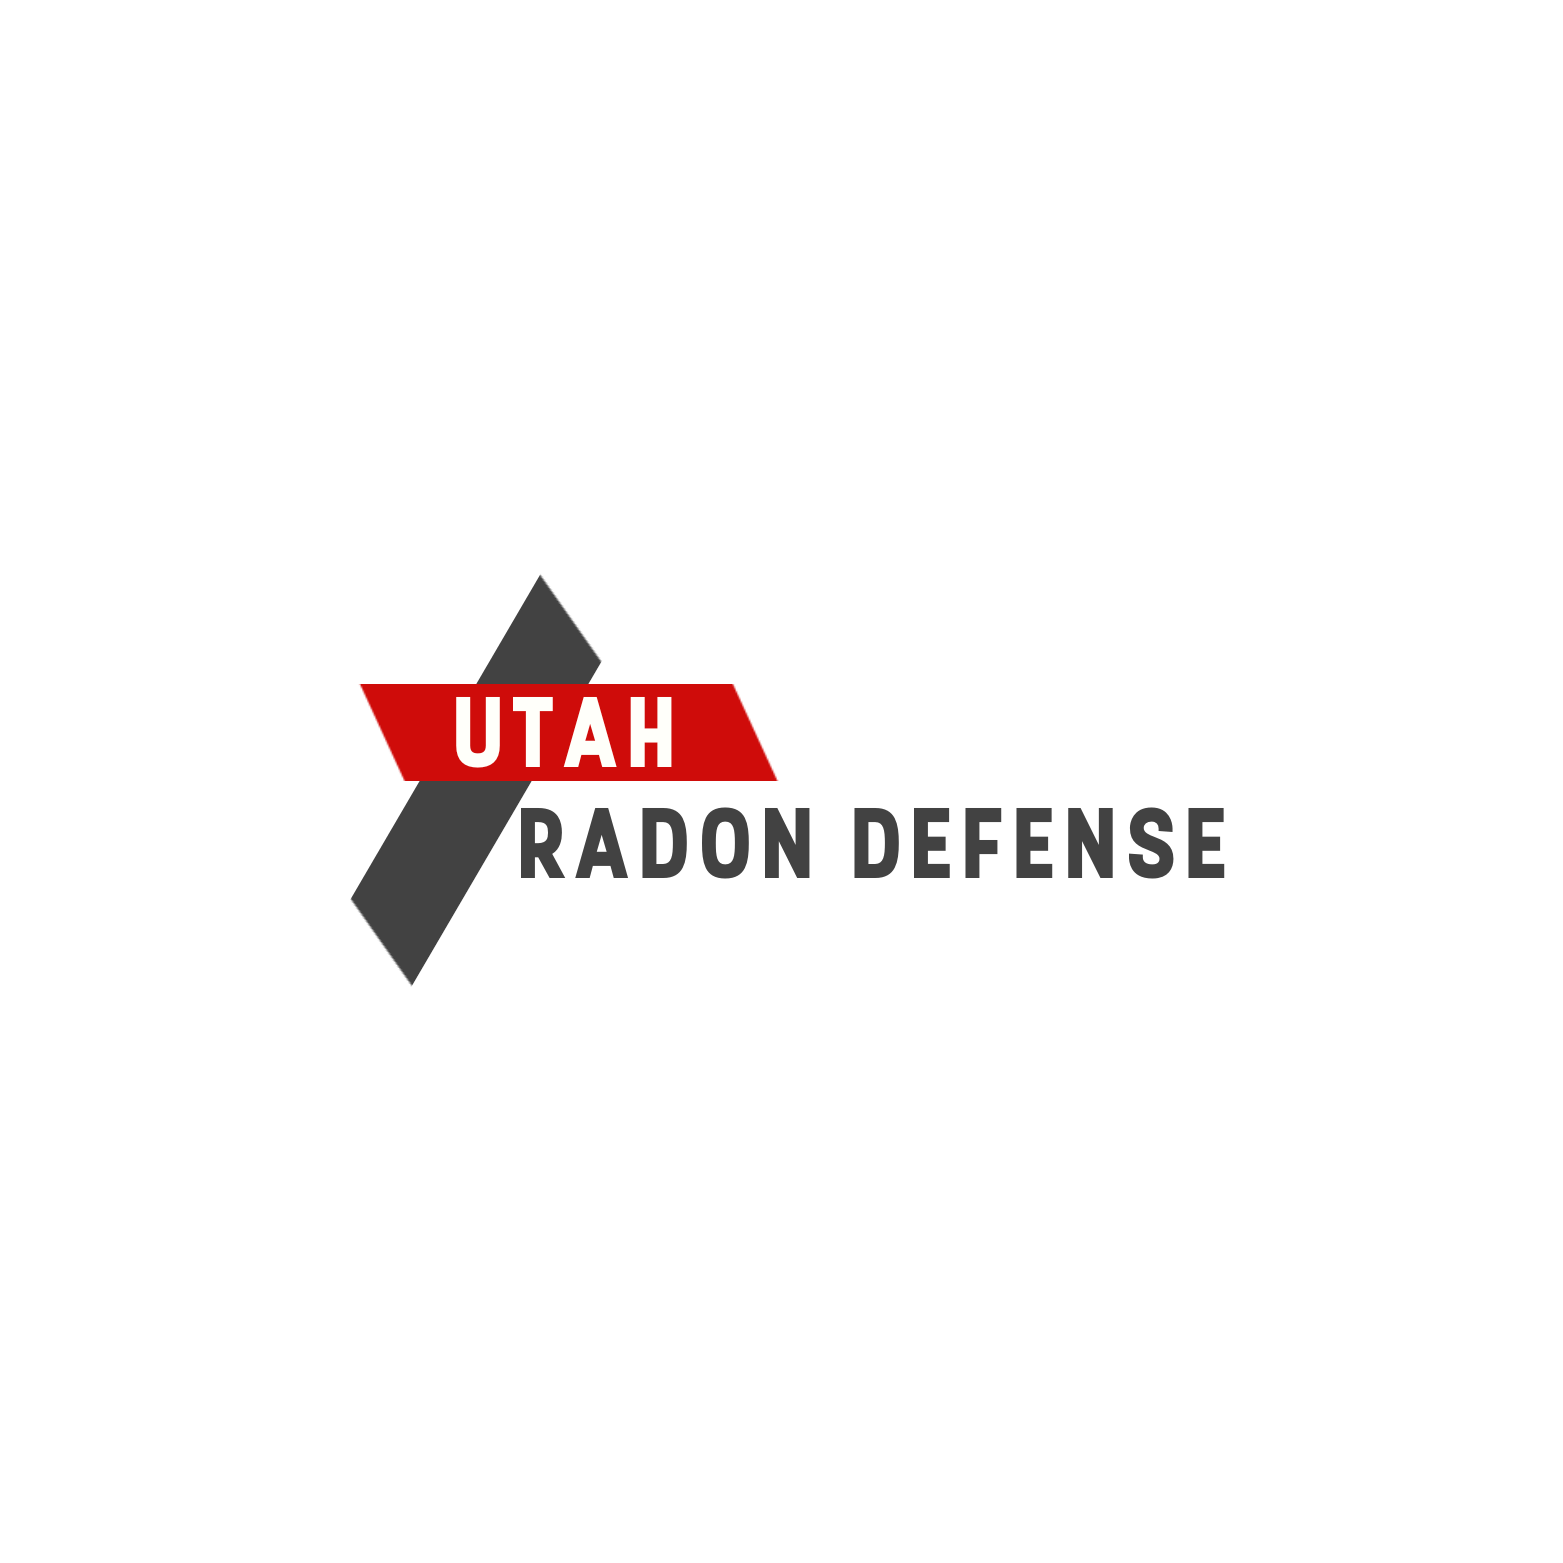 Utah Radon Defense website design example